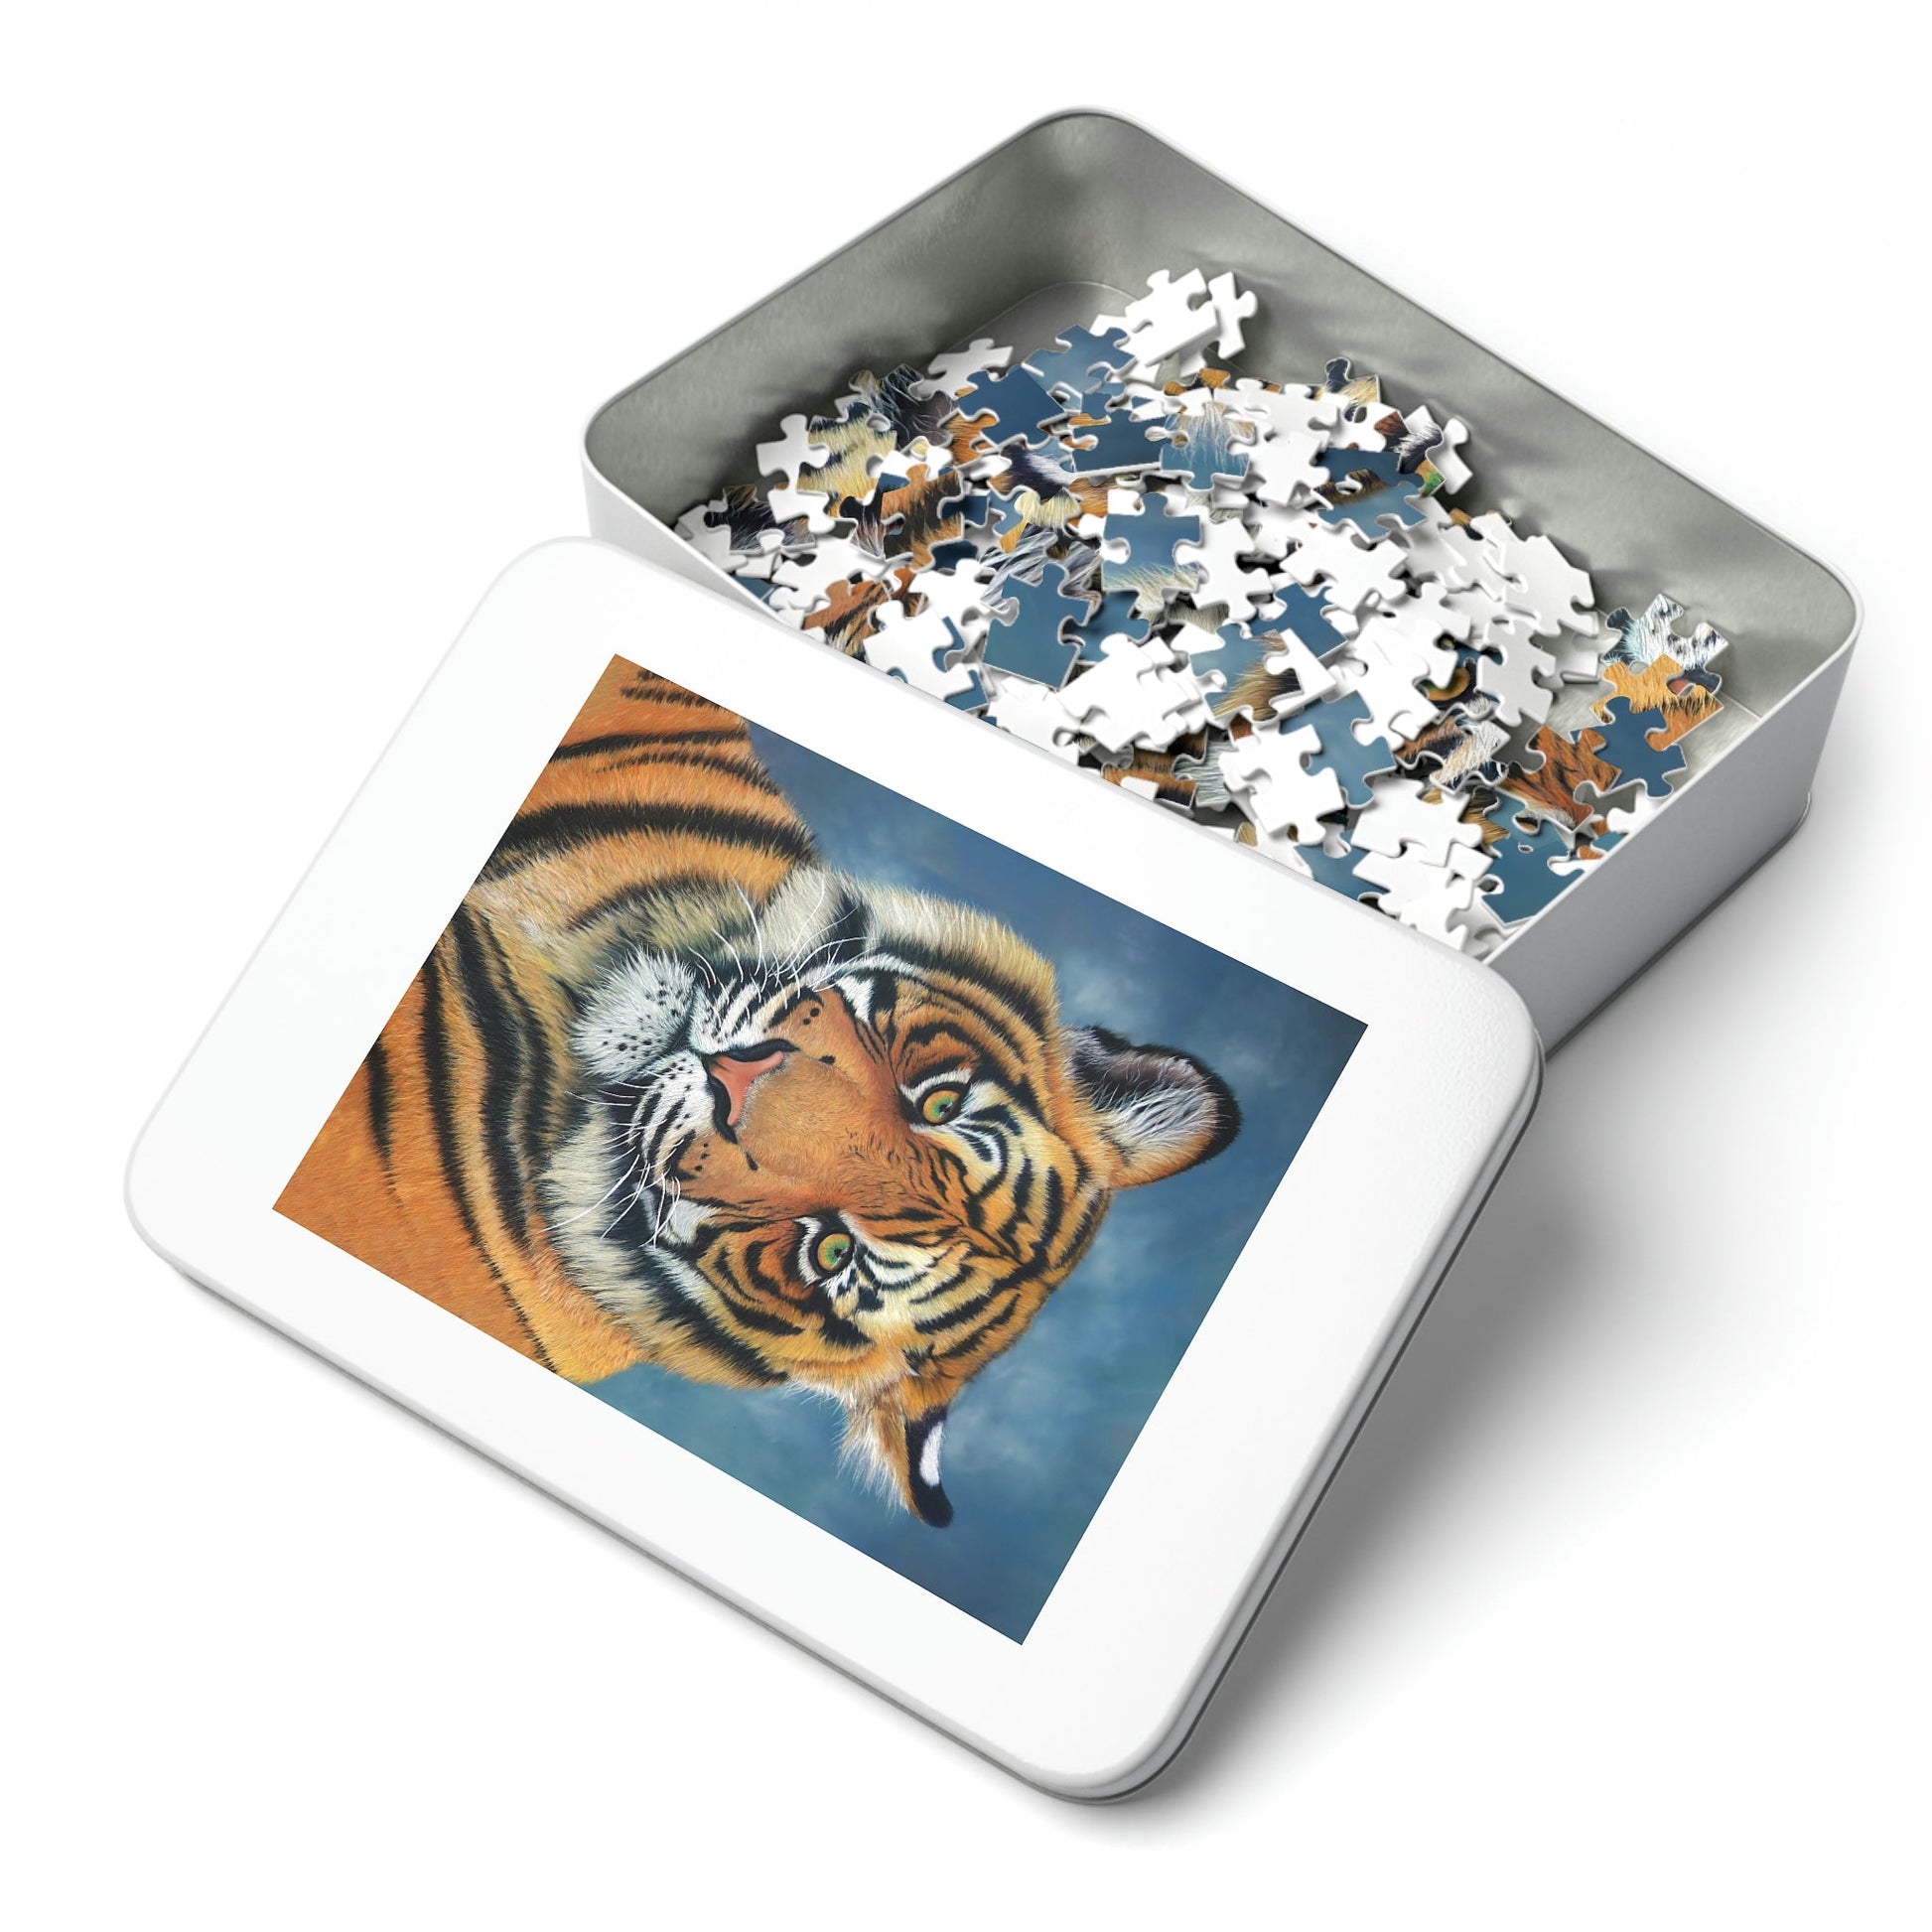 Jigsaw Puzzle - "TIGER"